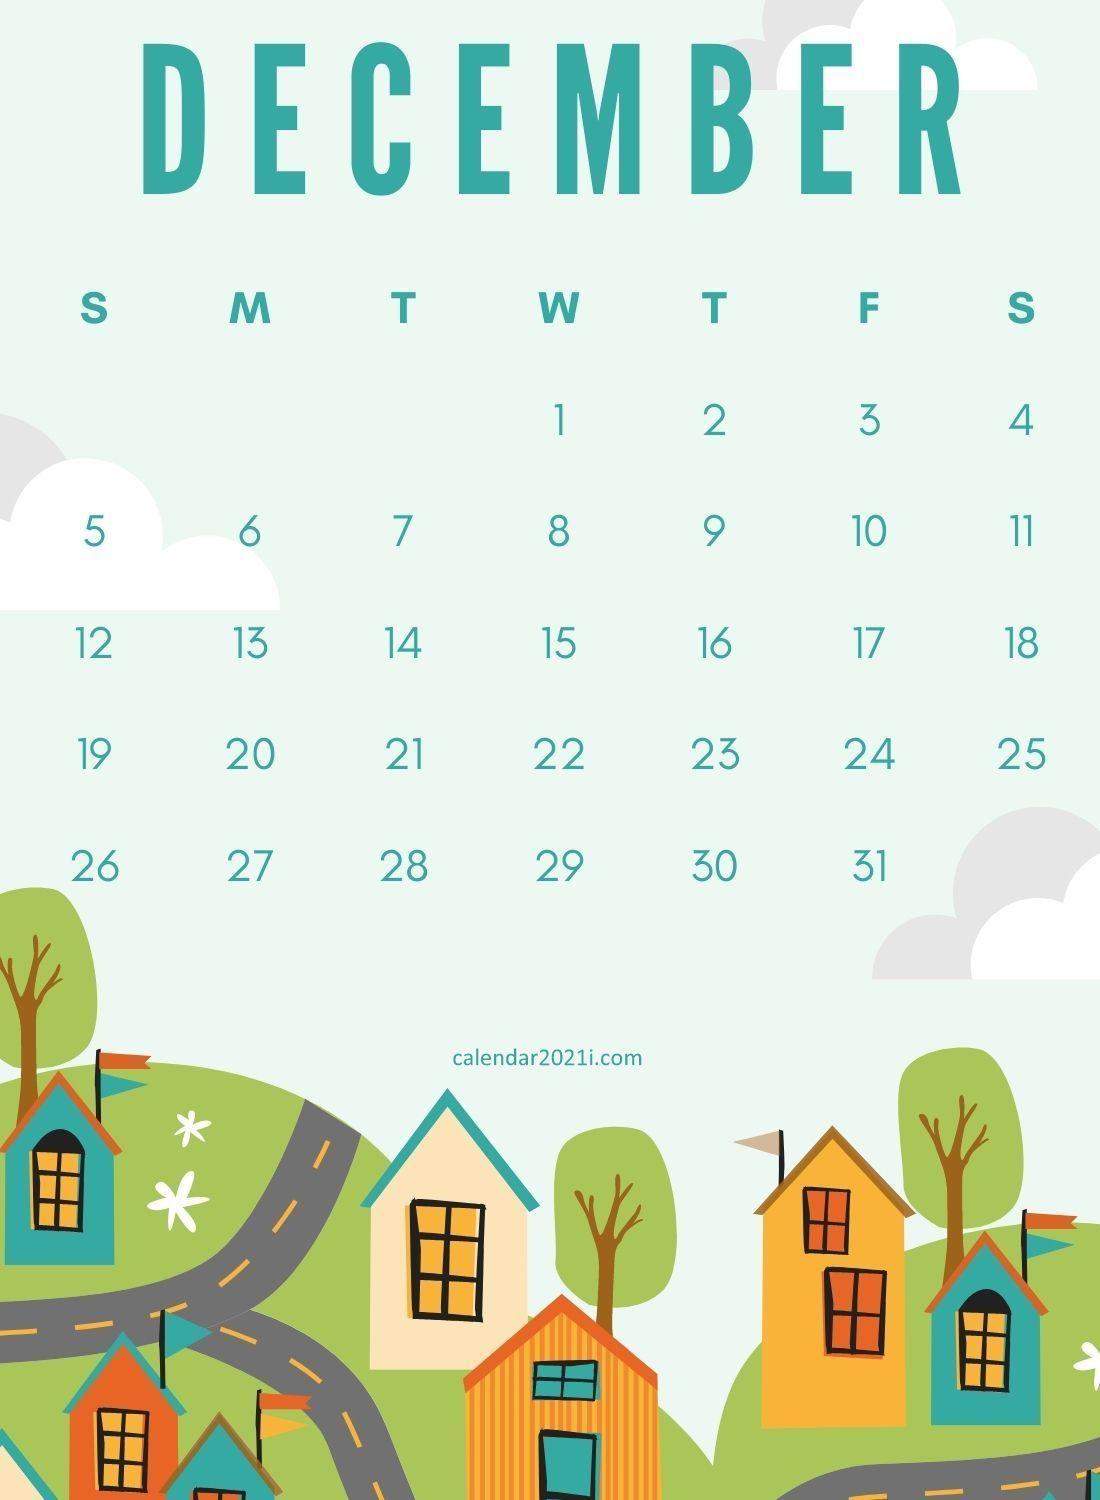 December 2021 Wall Calendar Printable Free Download For December 2021 Calendar Cute